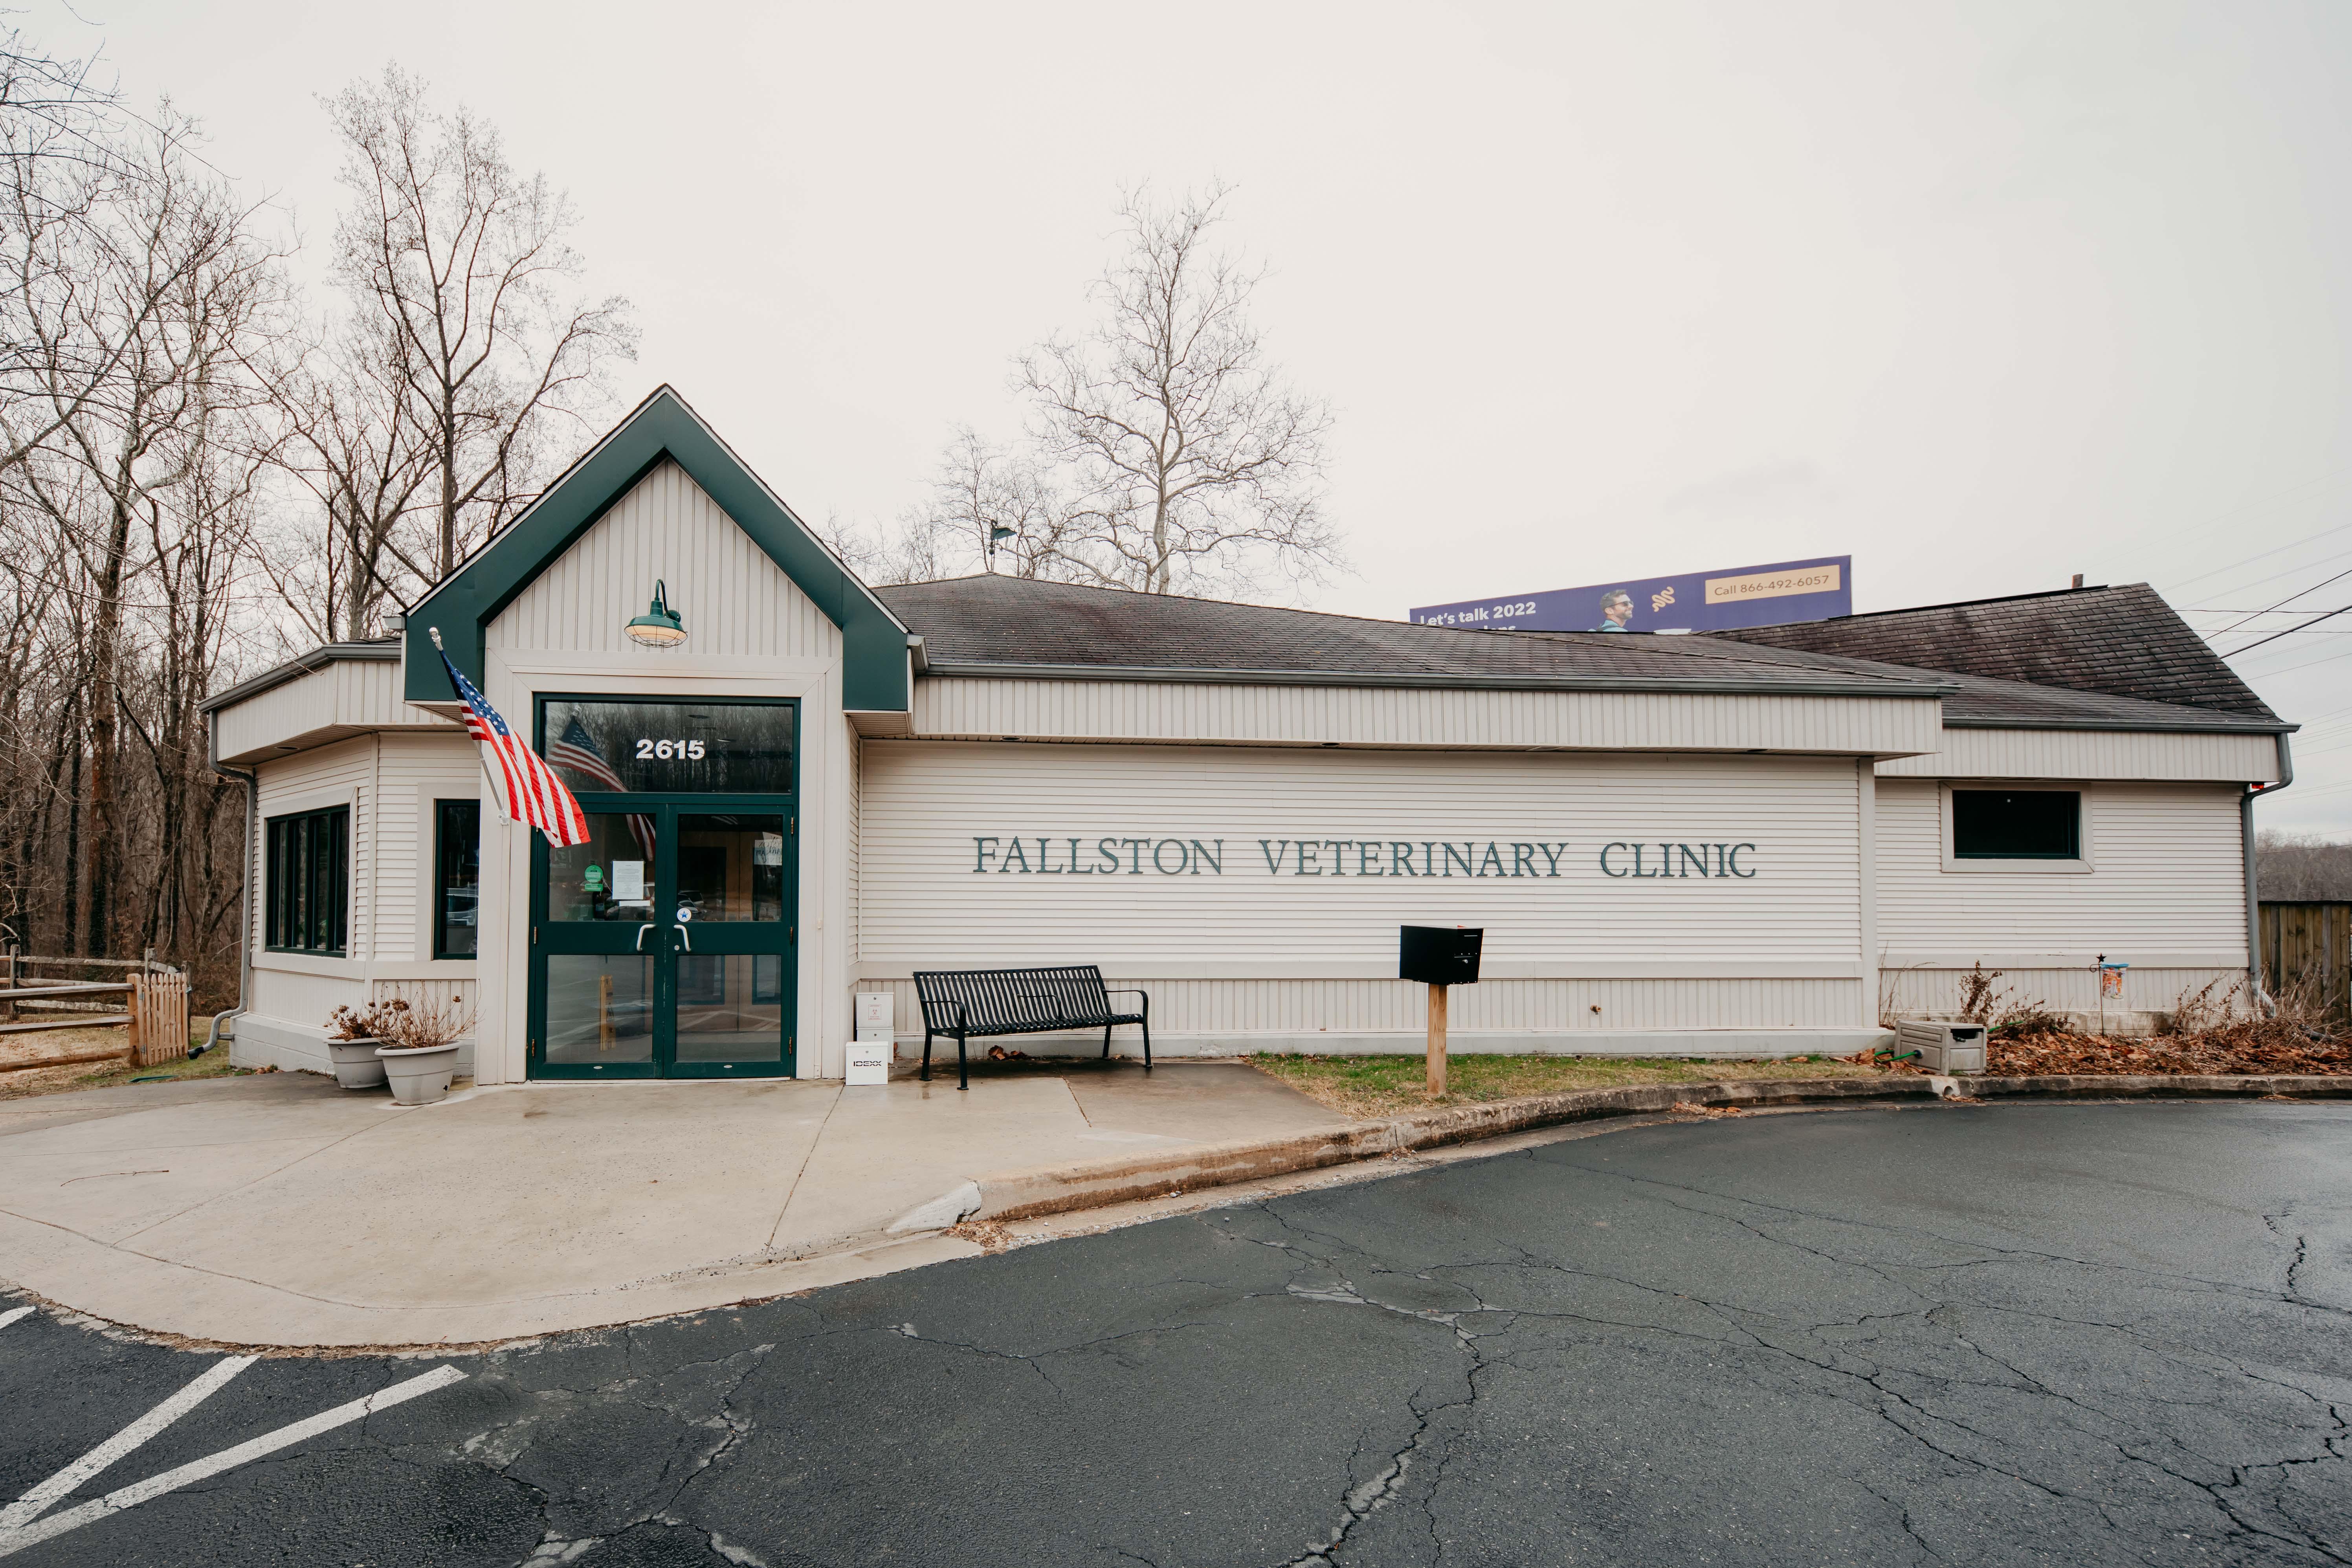 Fallston Veterinary Clinic 2615 Belair Rd, Fallston Maryland 21047